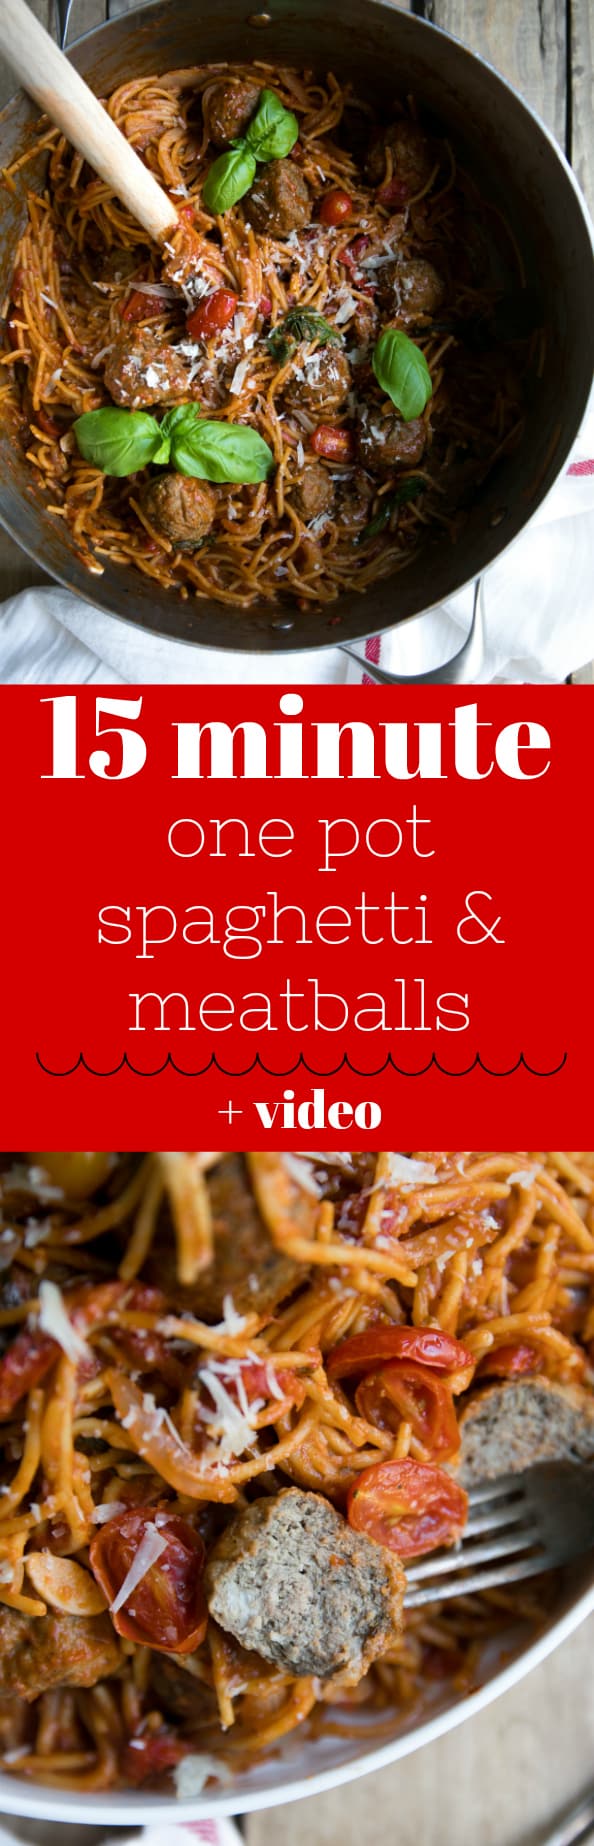 15 minute one pot spaghetti and meatballs